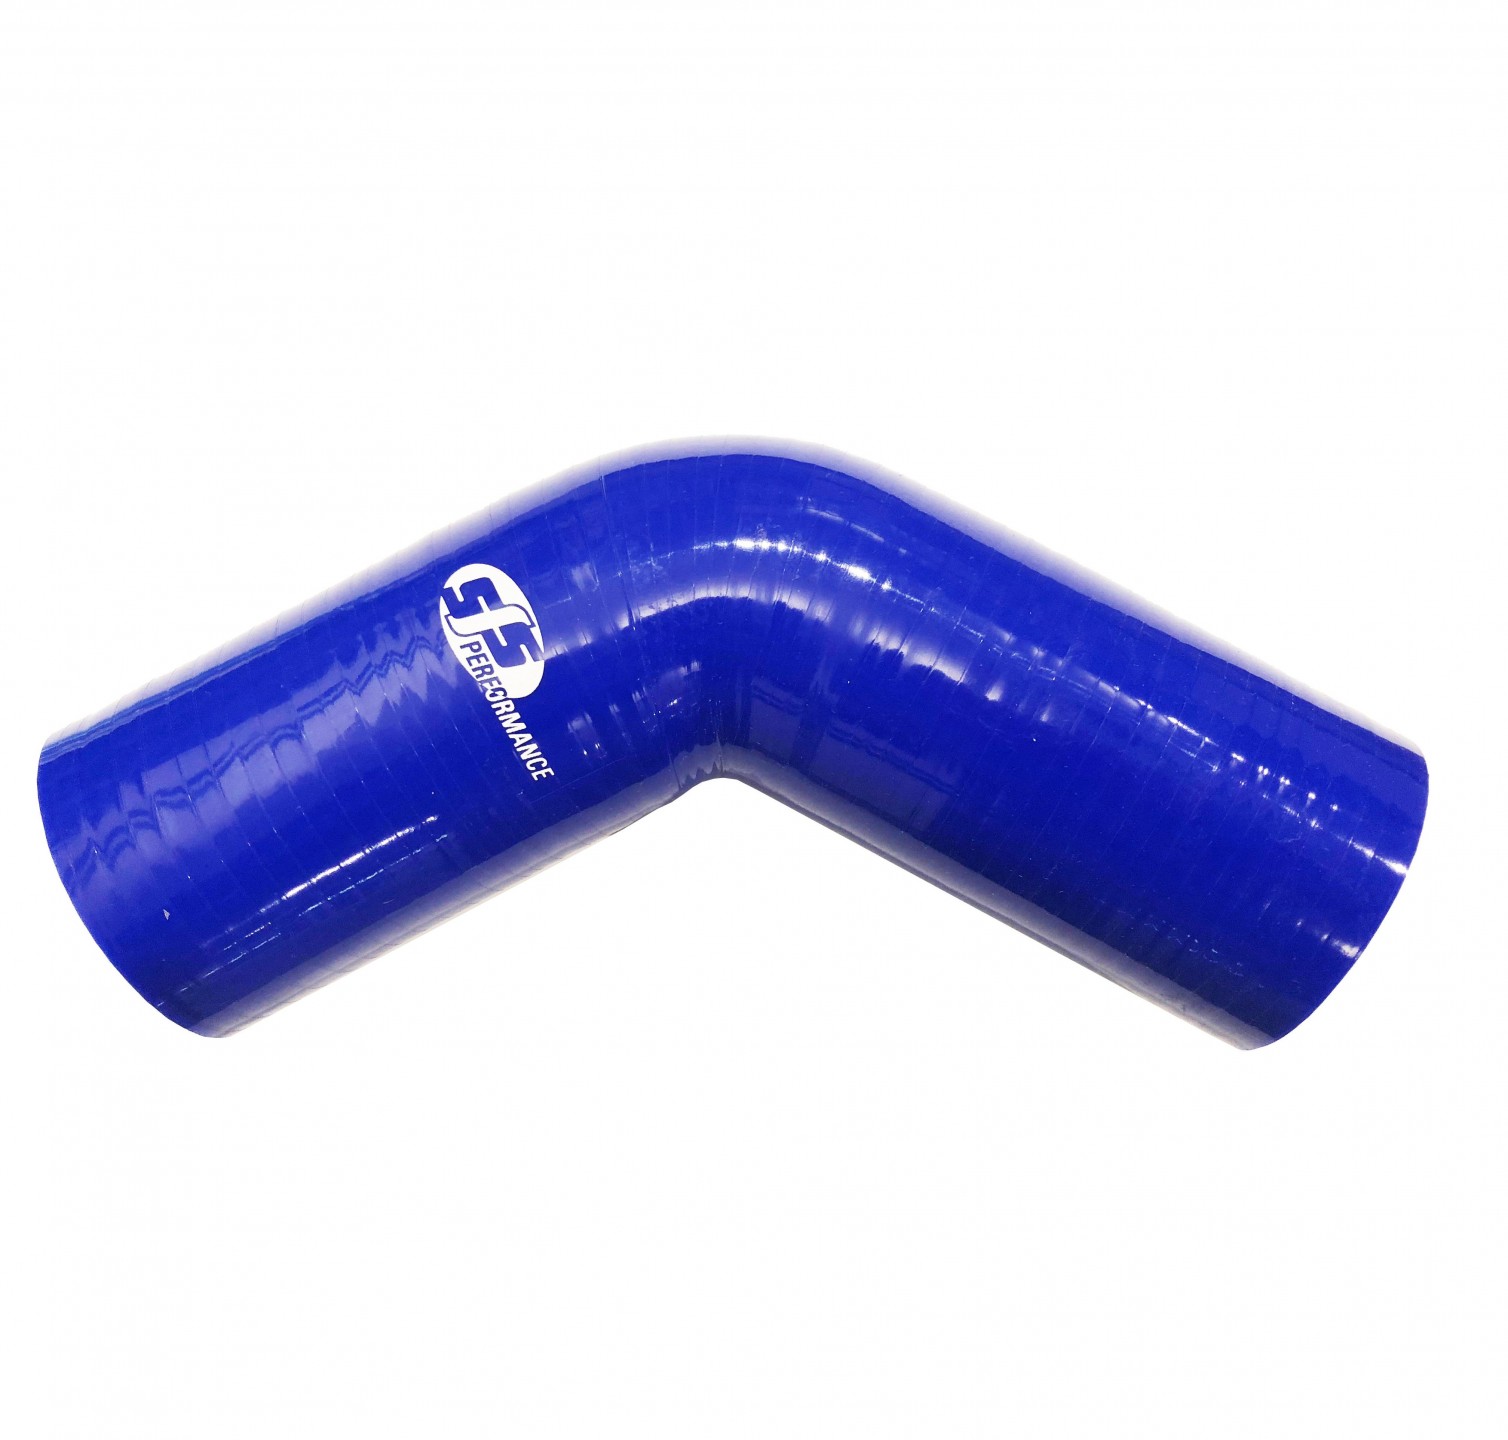 Codo de silicona 60°, Ø 102 mm int., largo de 152 mm, 3 capas Azul